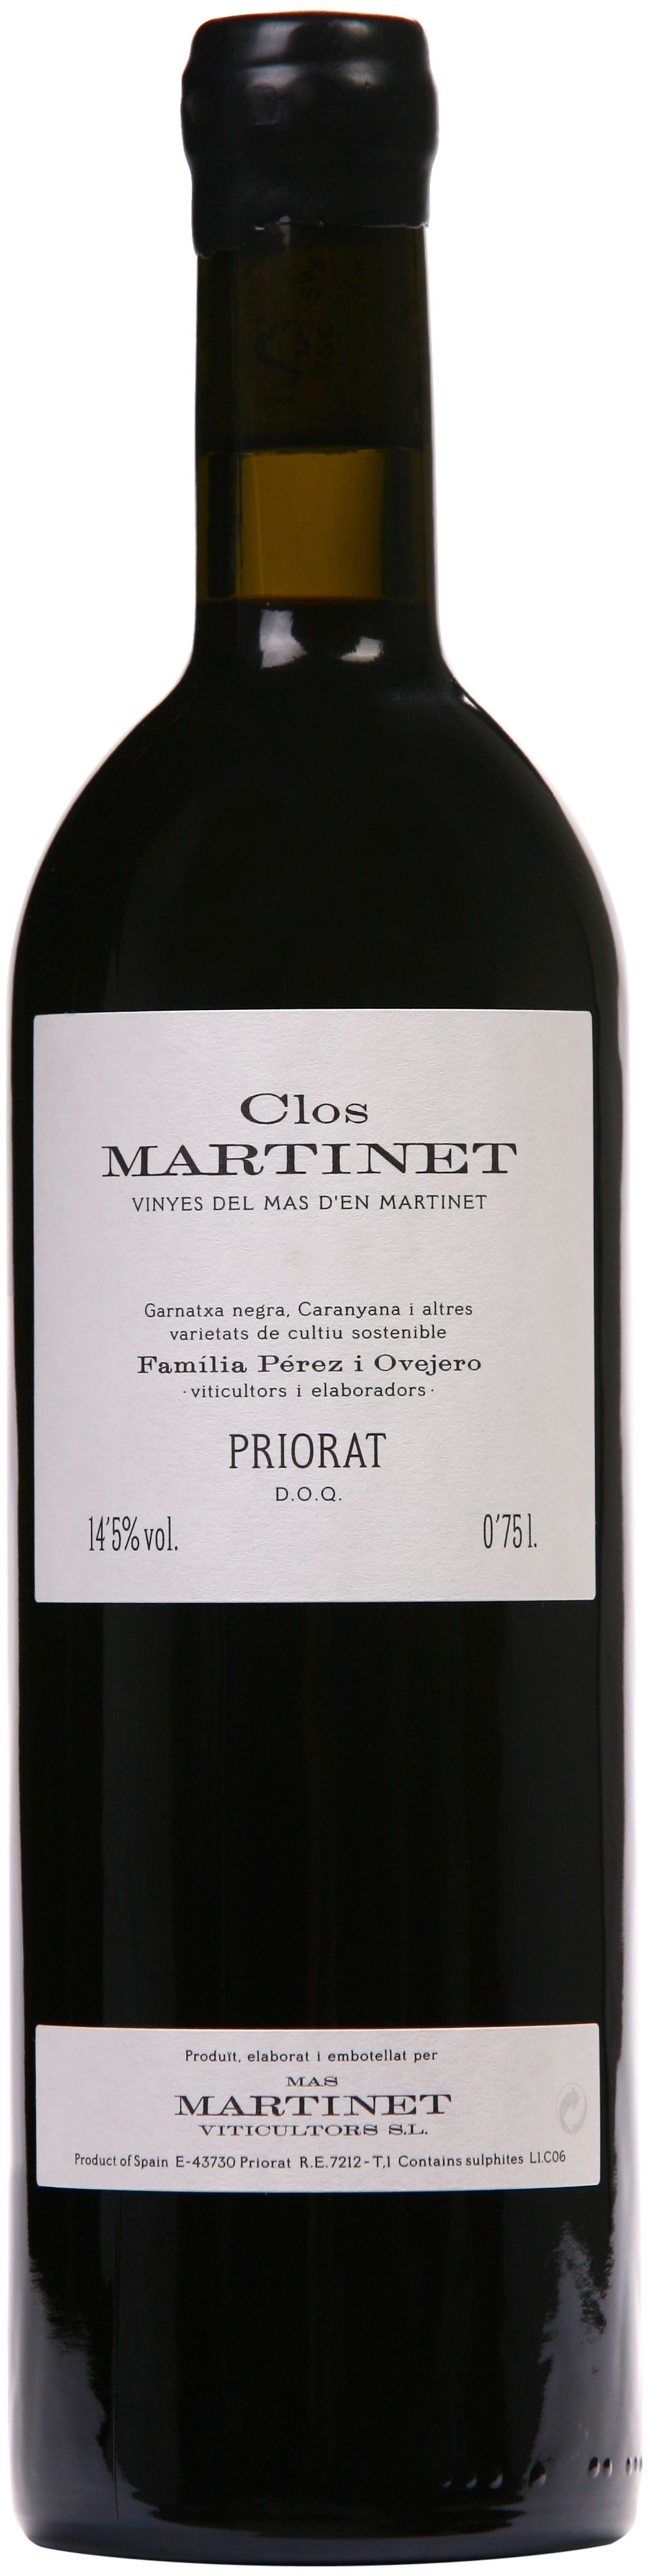 Mas Martinet, Clos Martinet, 2011